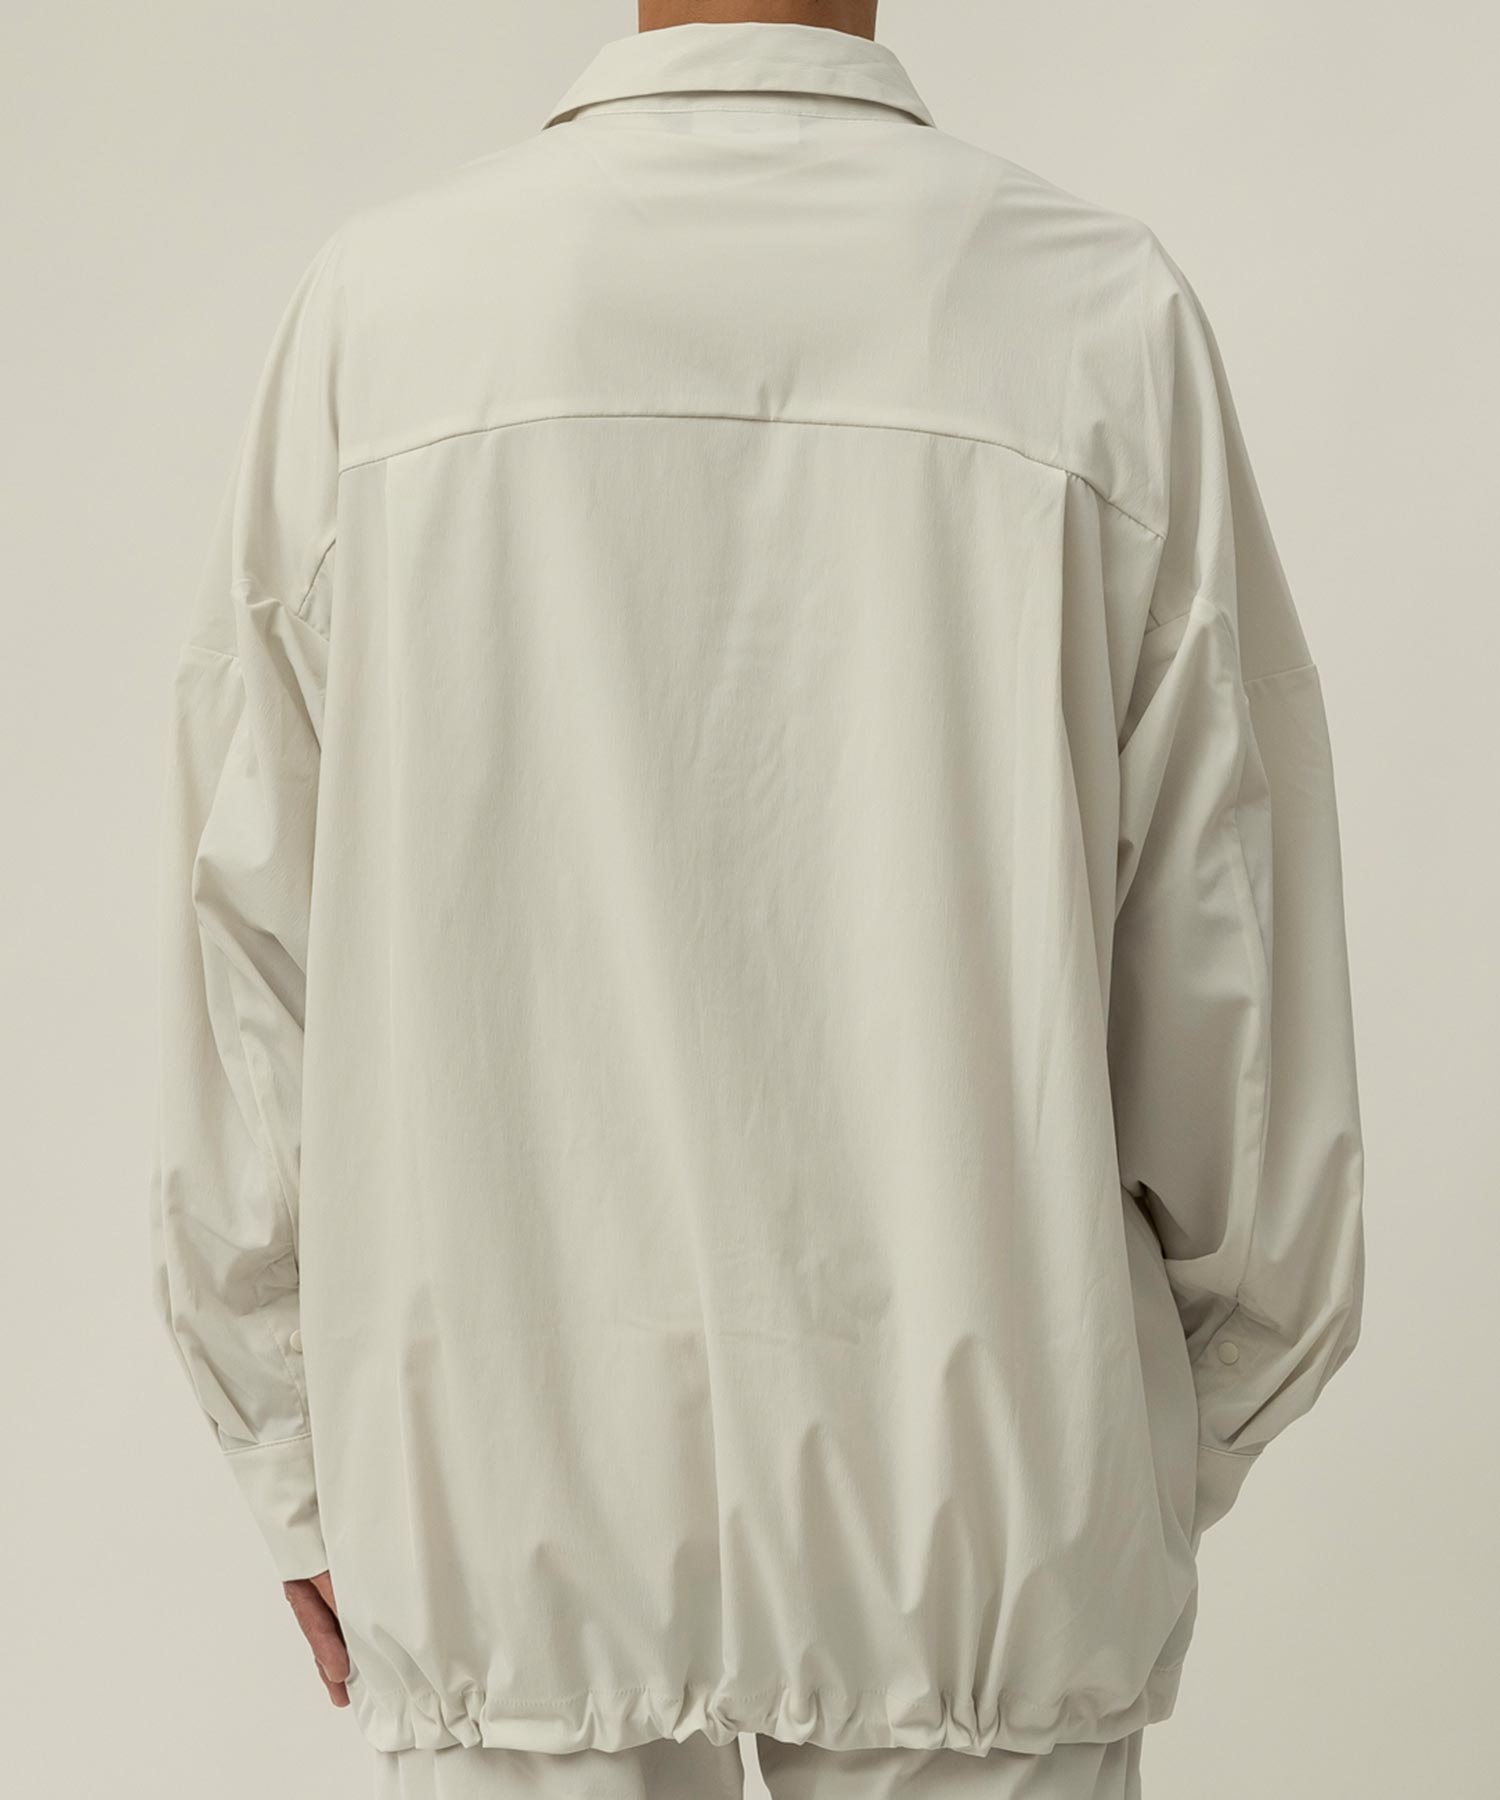 【MENS】Square Pocket Shirts KAR ロングスリーブシャツ ワイドシルエット メンズシャツ / karu-stretch taffeta II / アルクフェニックス